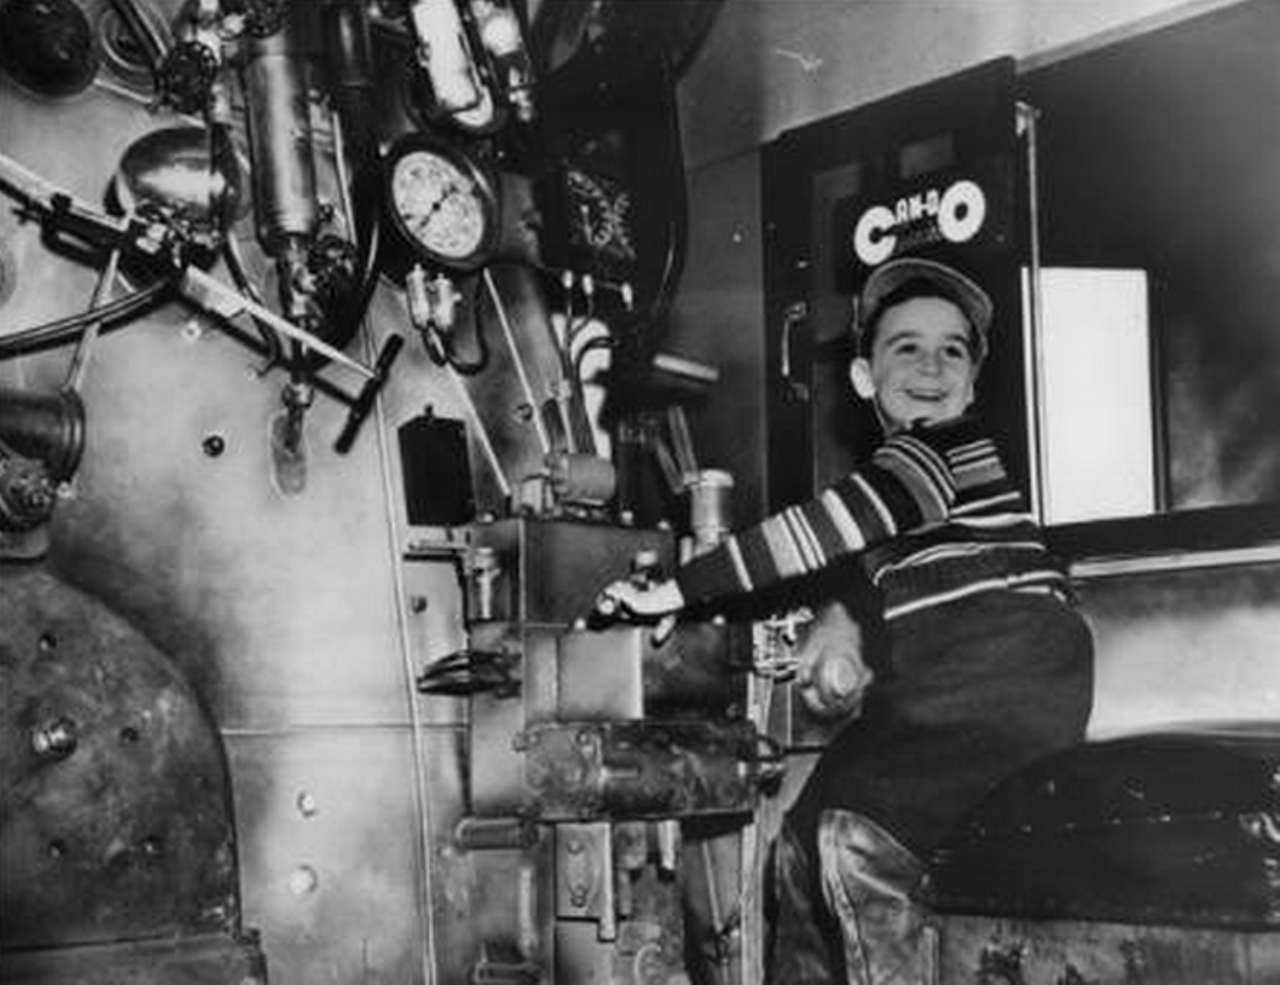 Taking an indoor train ride at Higbee's, 1948.